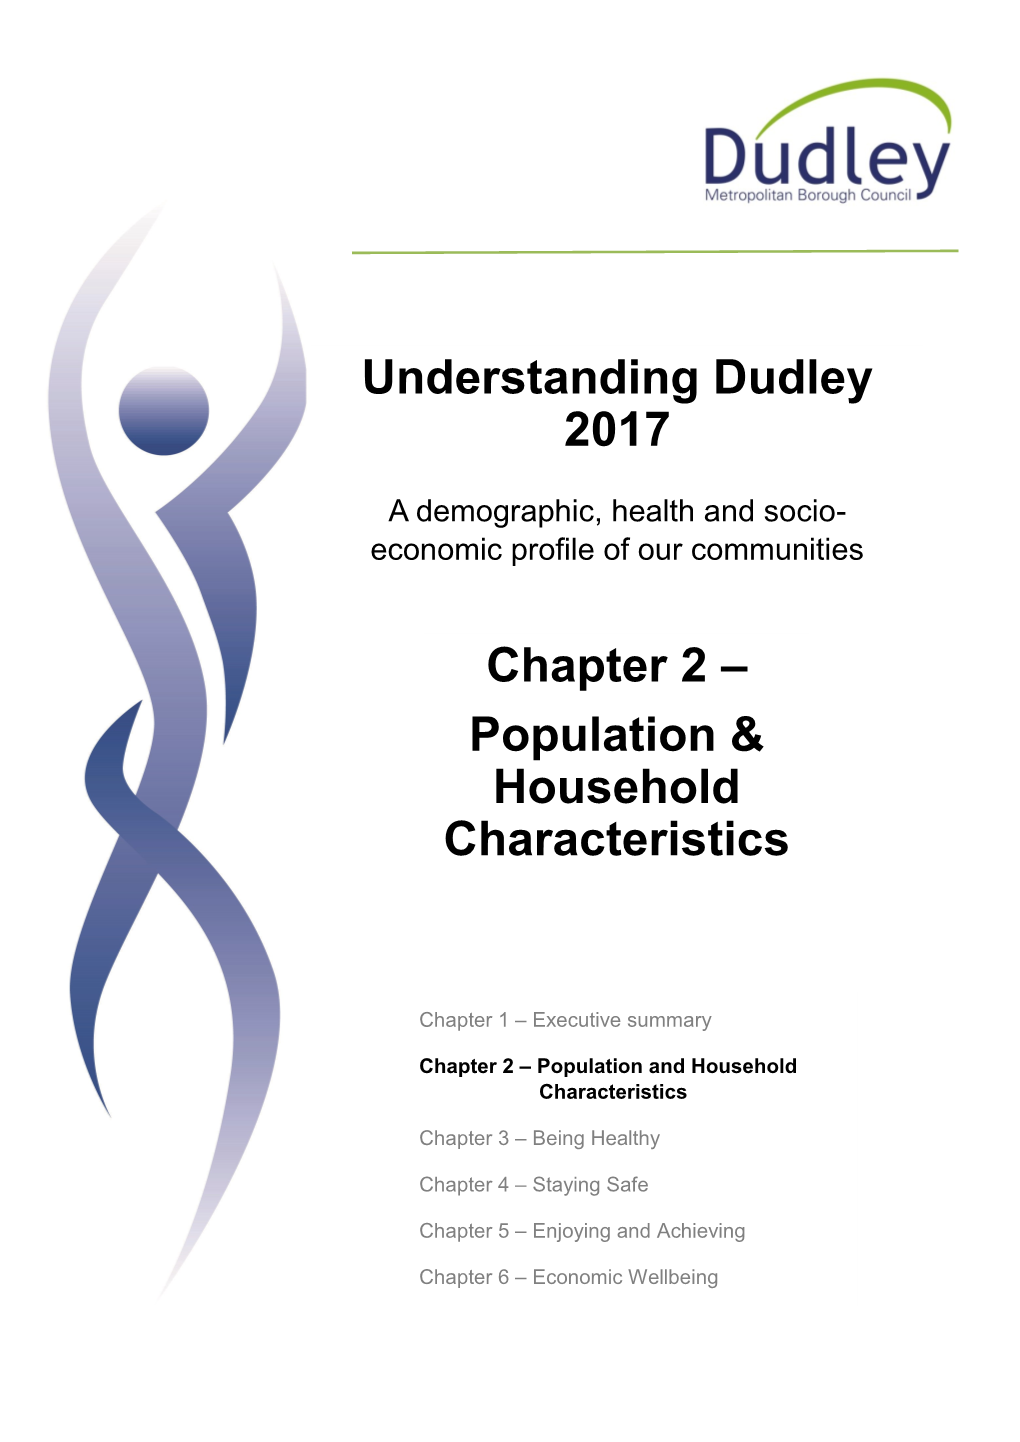 Population & Household Characteristics